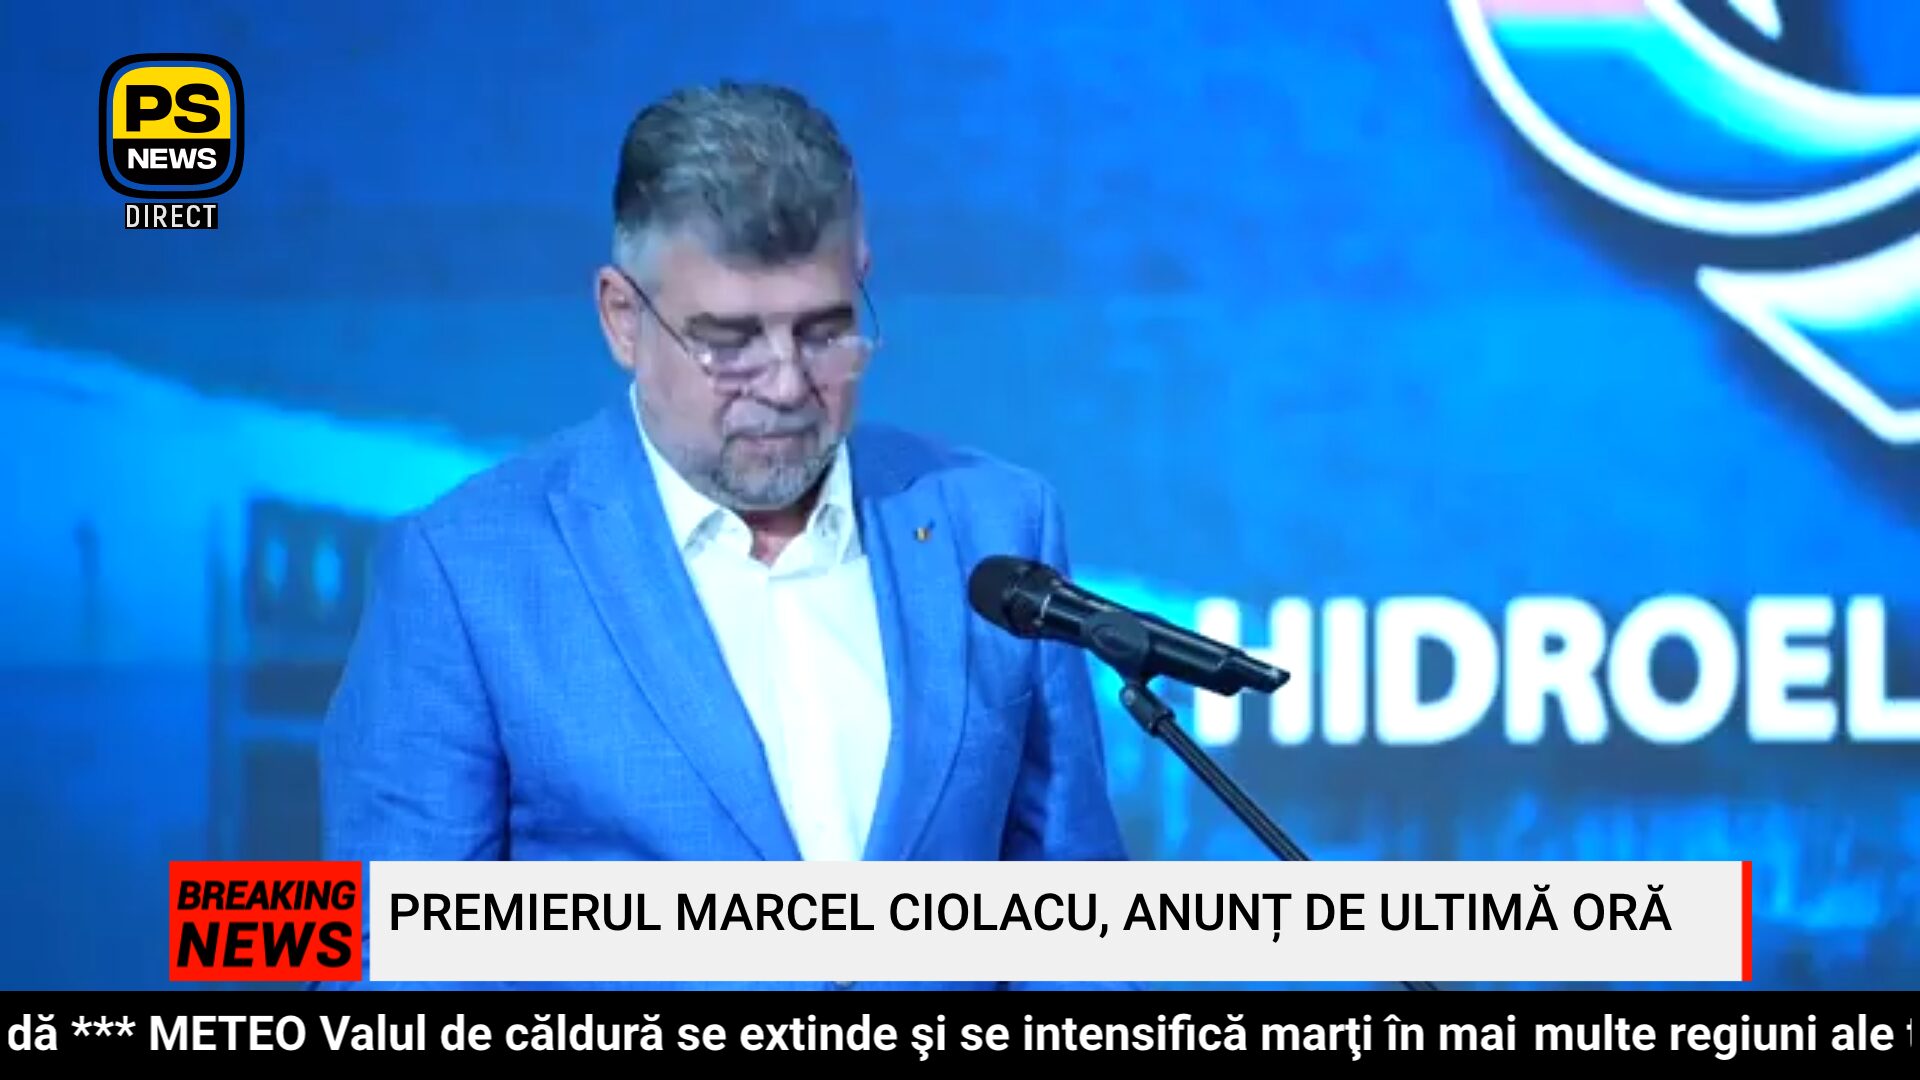 PS News TV: Premierul Marcel Ciolacu, la Centrala Hidroelectrică Vidraru